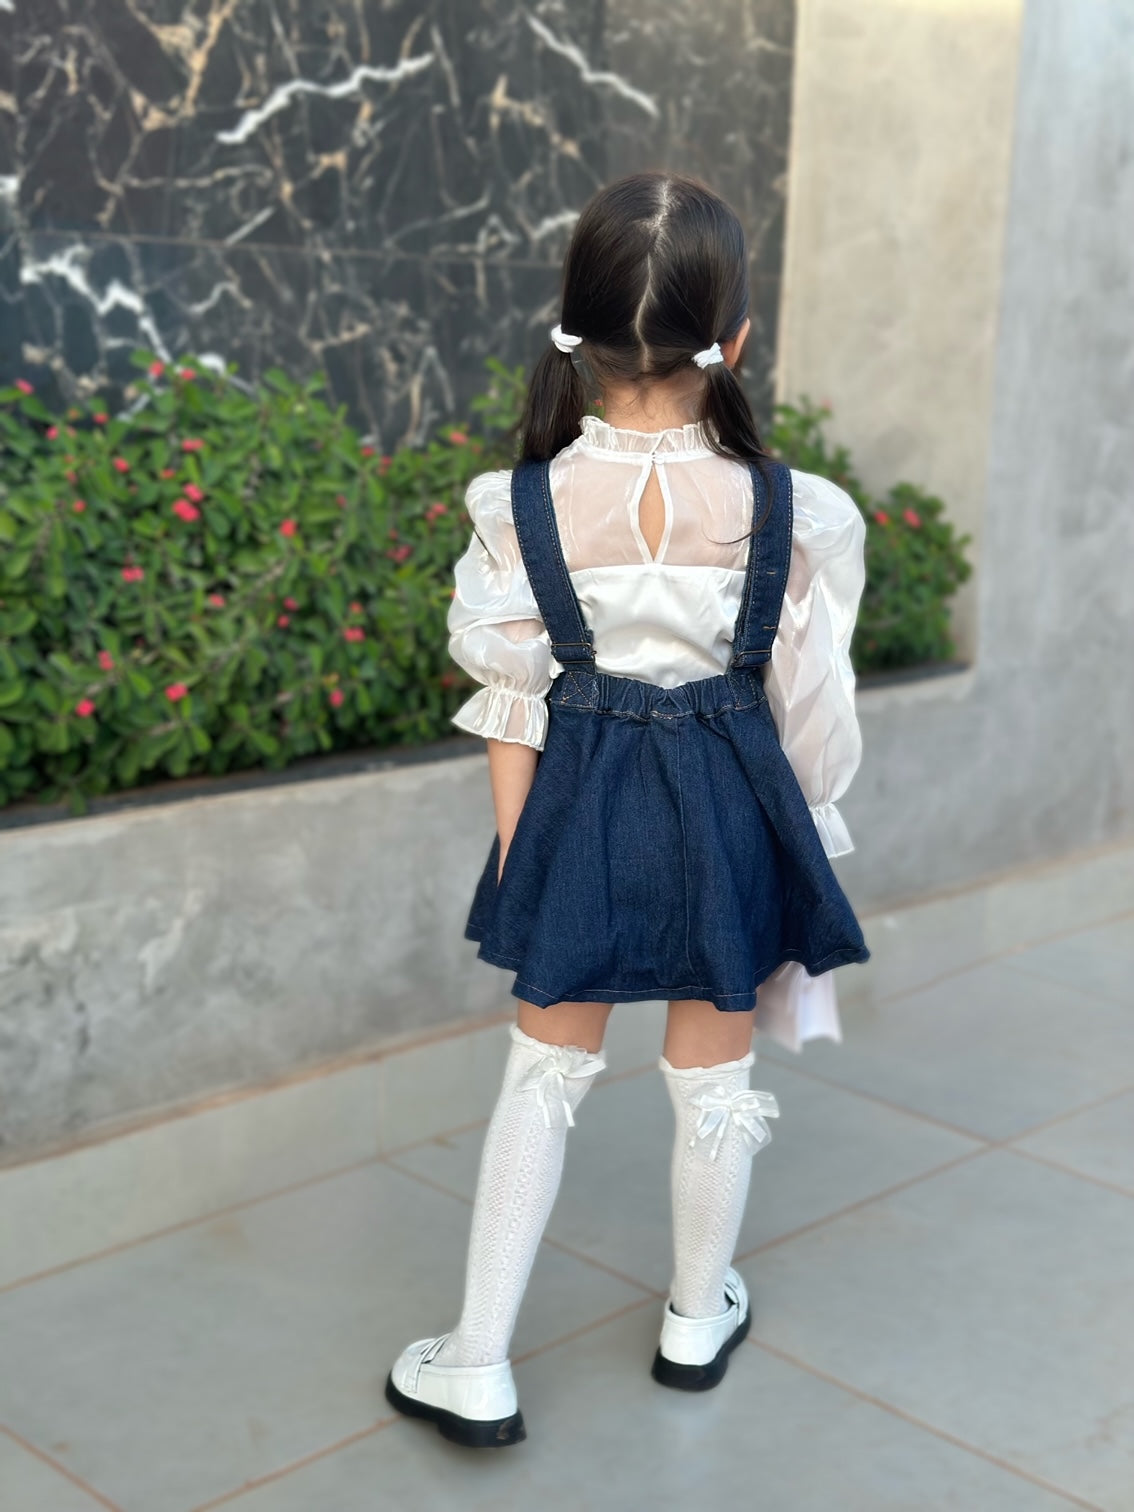 Space Dress Overalls Adjustable Denim Jeans Jumpers Kidscool Girls –